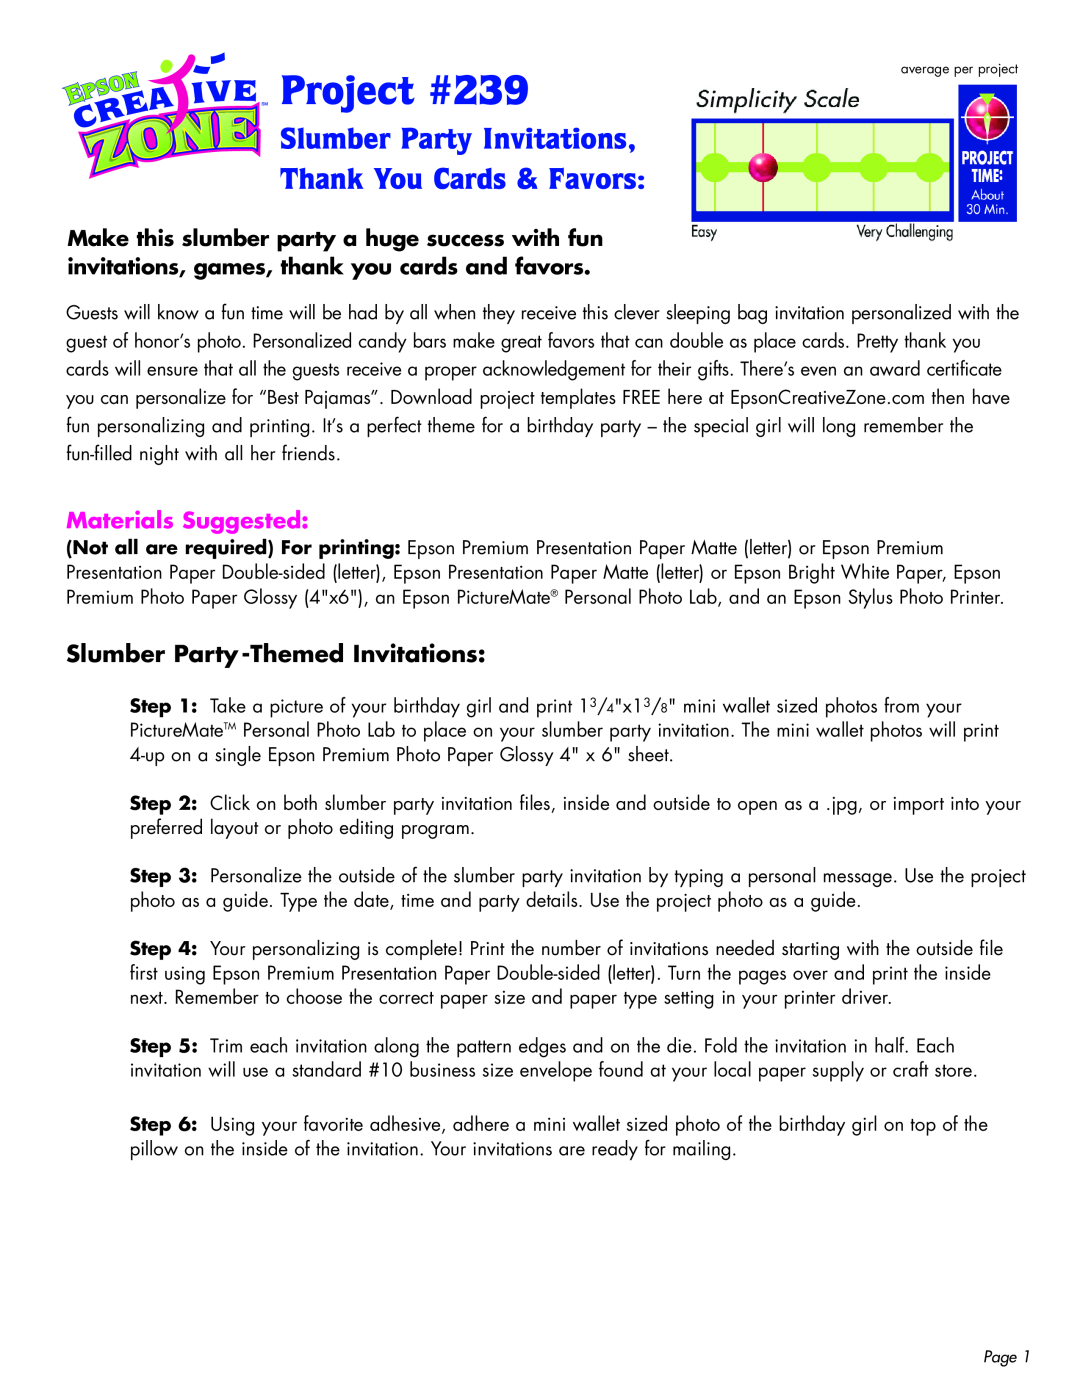 Epson manual Slumber Party -Themed Invitations, Project #239, Slumber Party Invitations Thank You Cards & Favors 